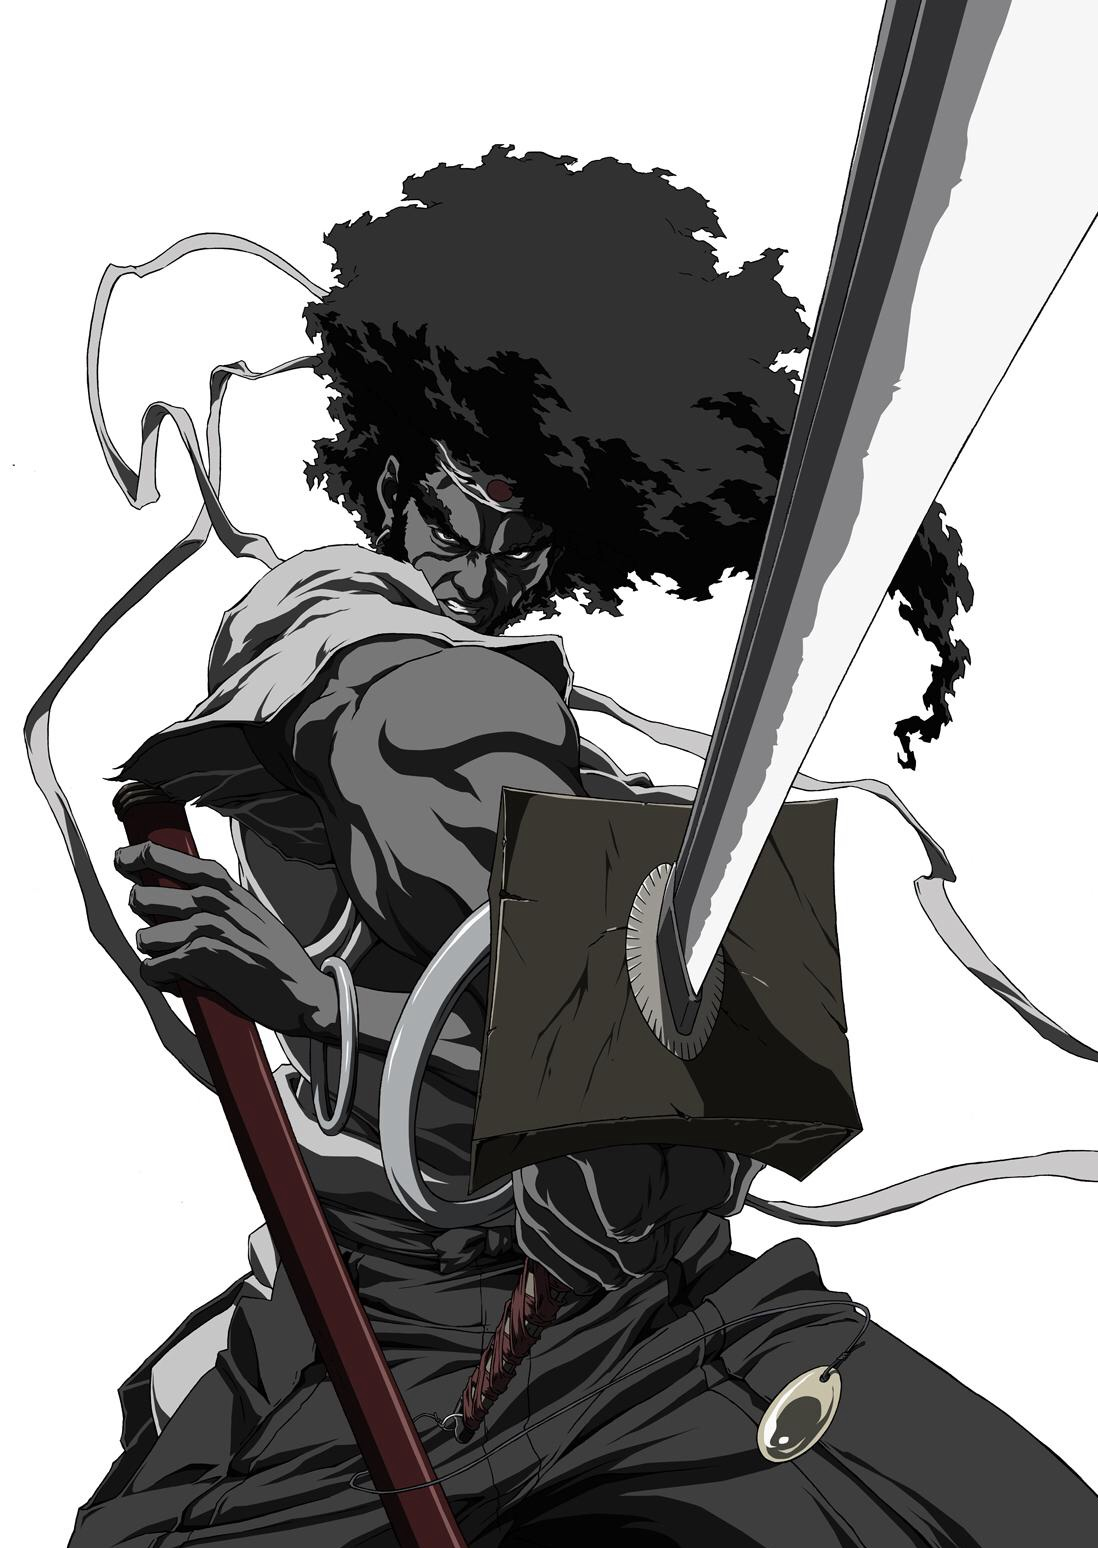 Afro Samurai - Character (15599) - AniDB